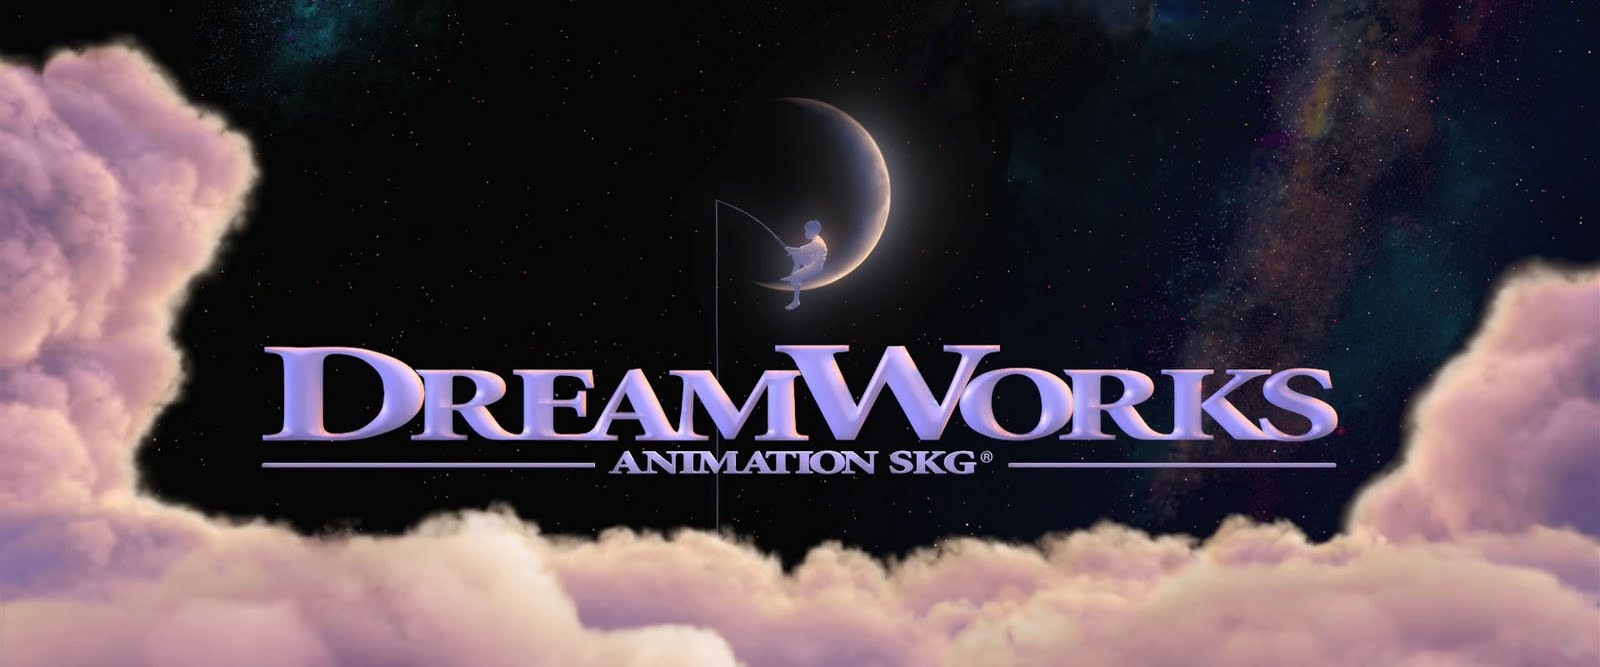 dreamworks-cinemascomics